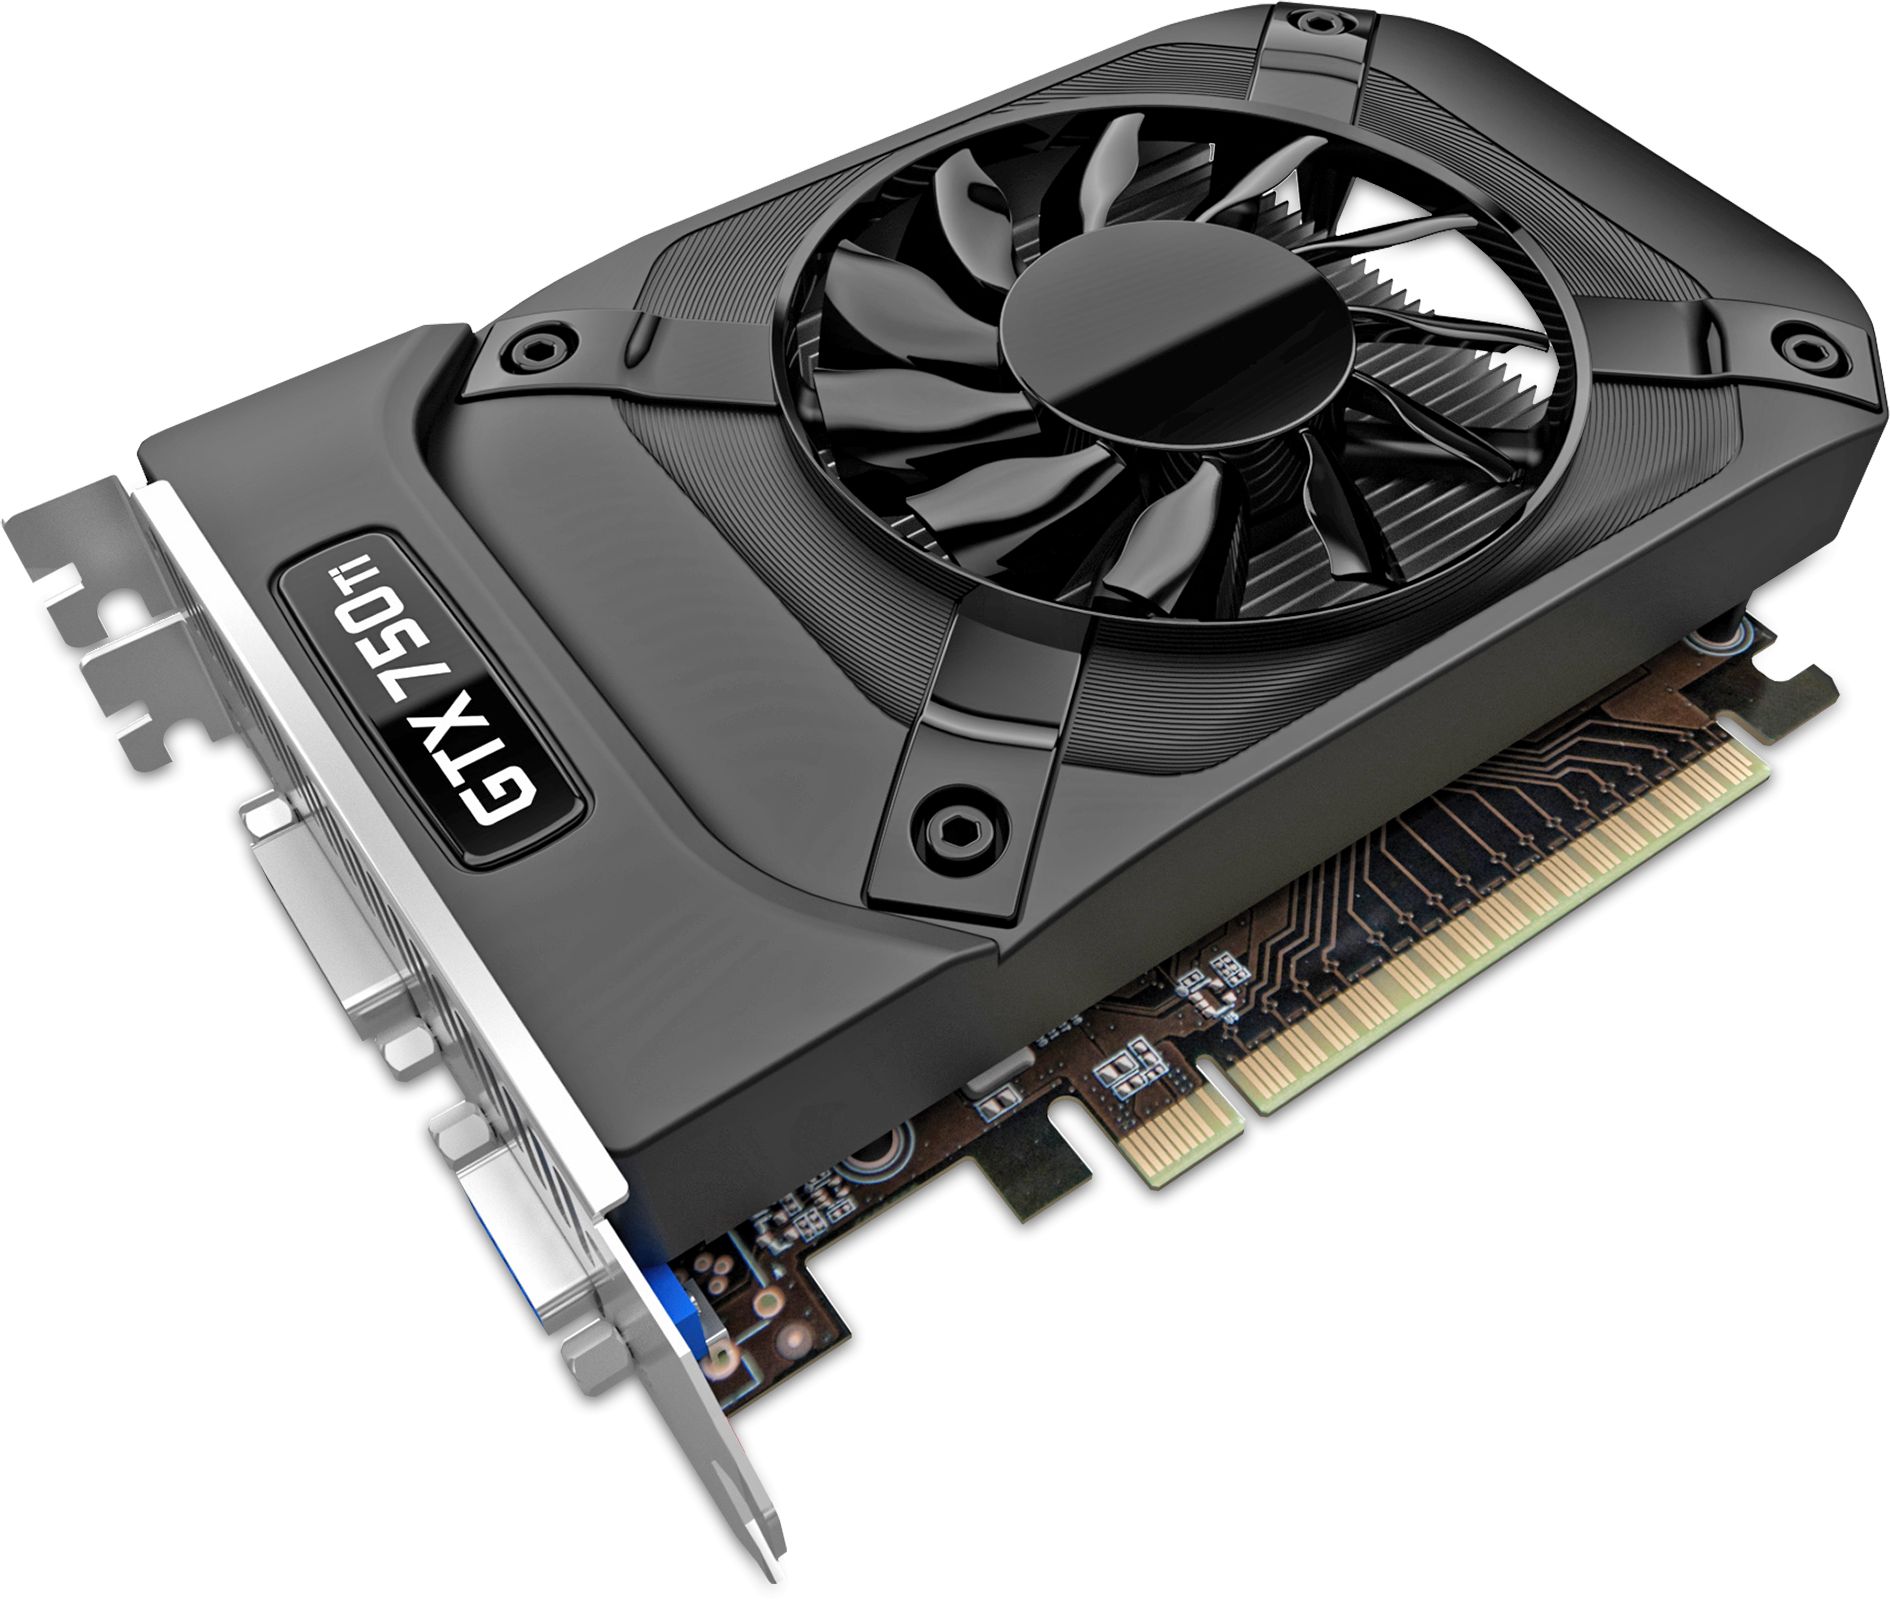 Geforce GTX 750 Ti StormX OC 2GB GDDR5 Graphics Card